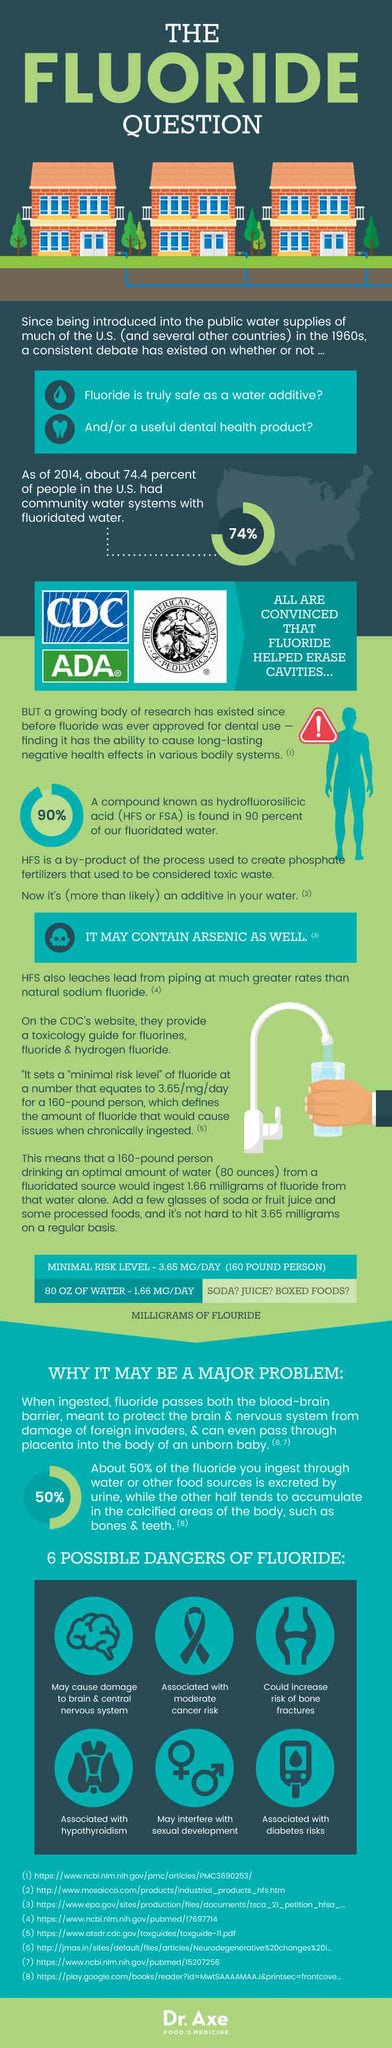 fluoride-dr-axe-infographic